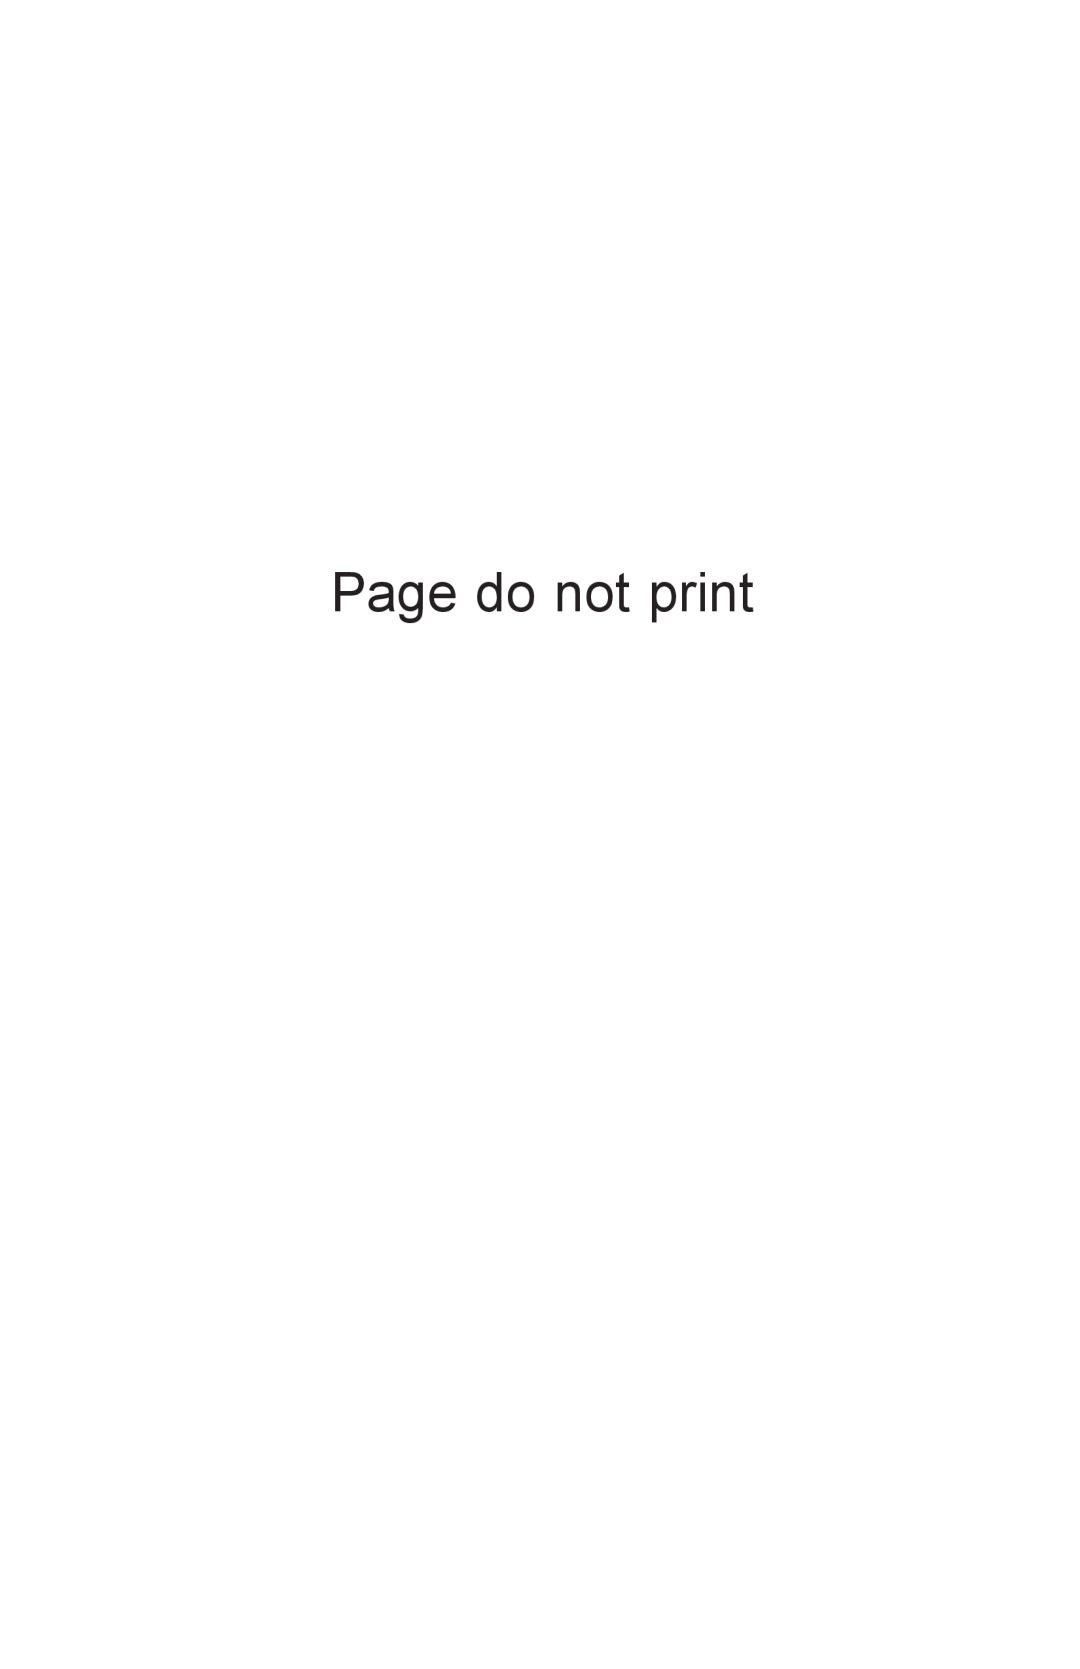 Minuteman UPS MBK-E SERIES user manual Page do not print 